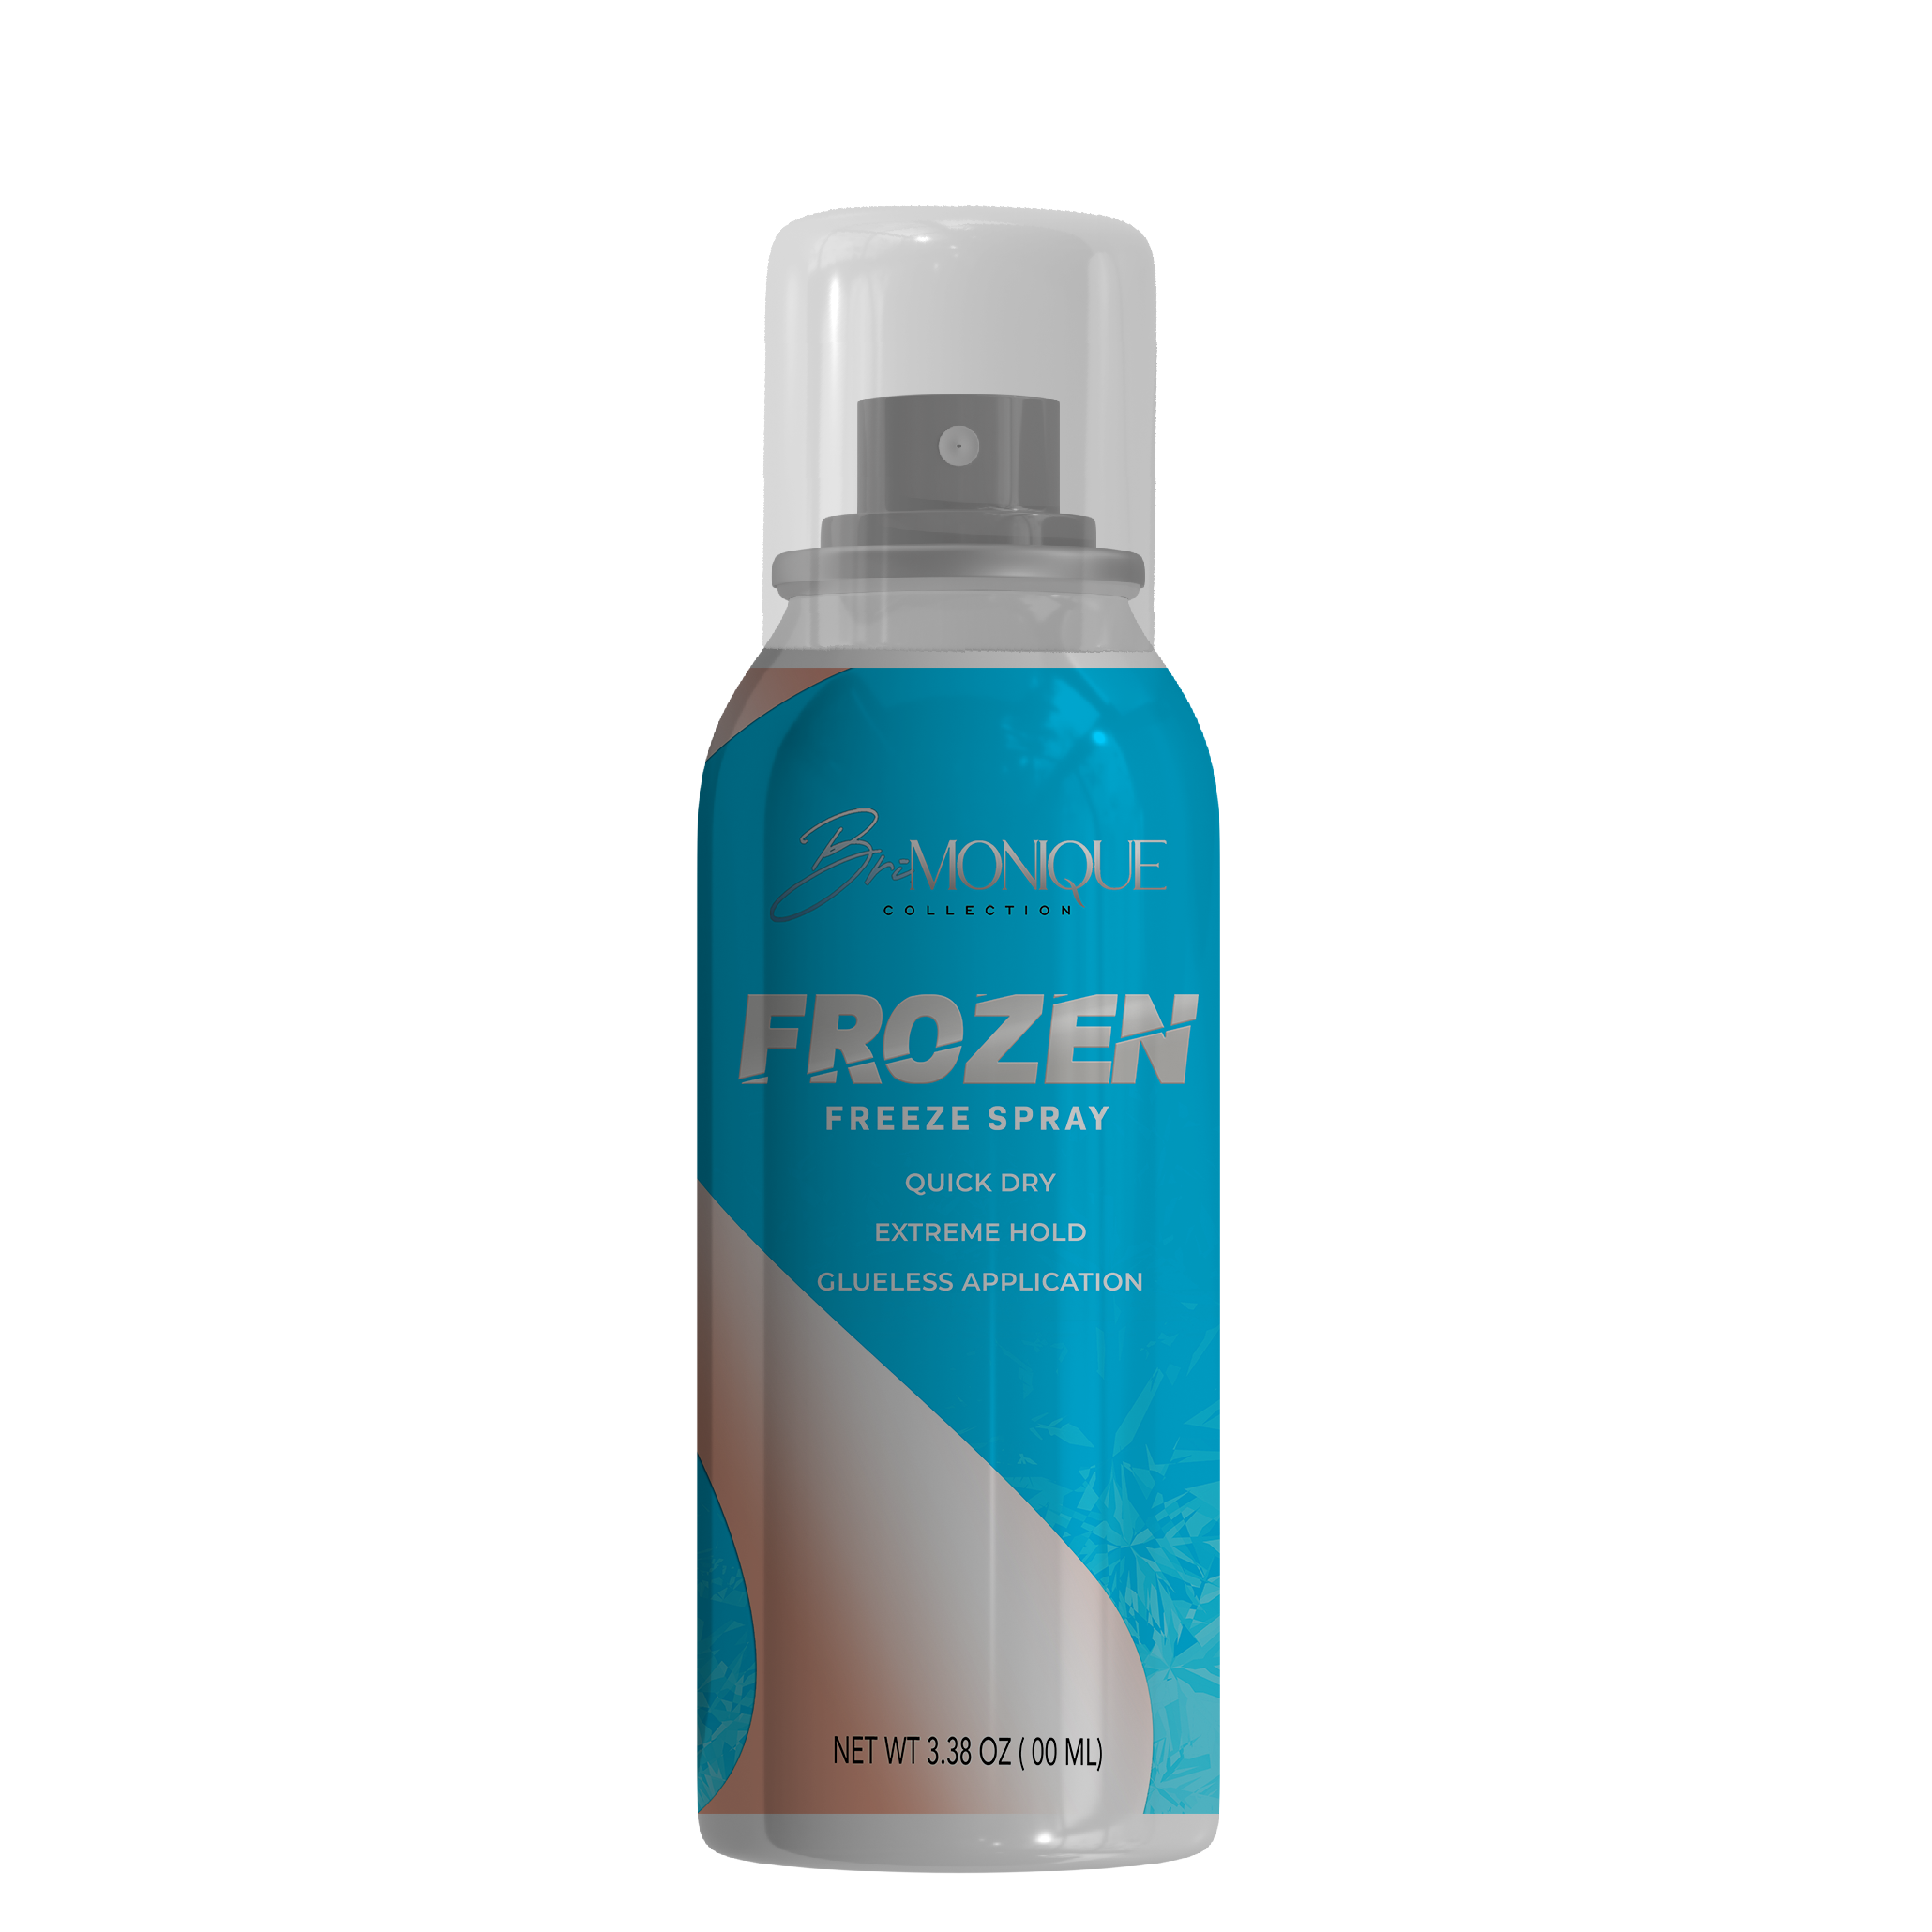 Frozen Freeze Spray